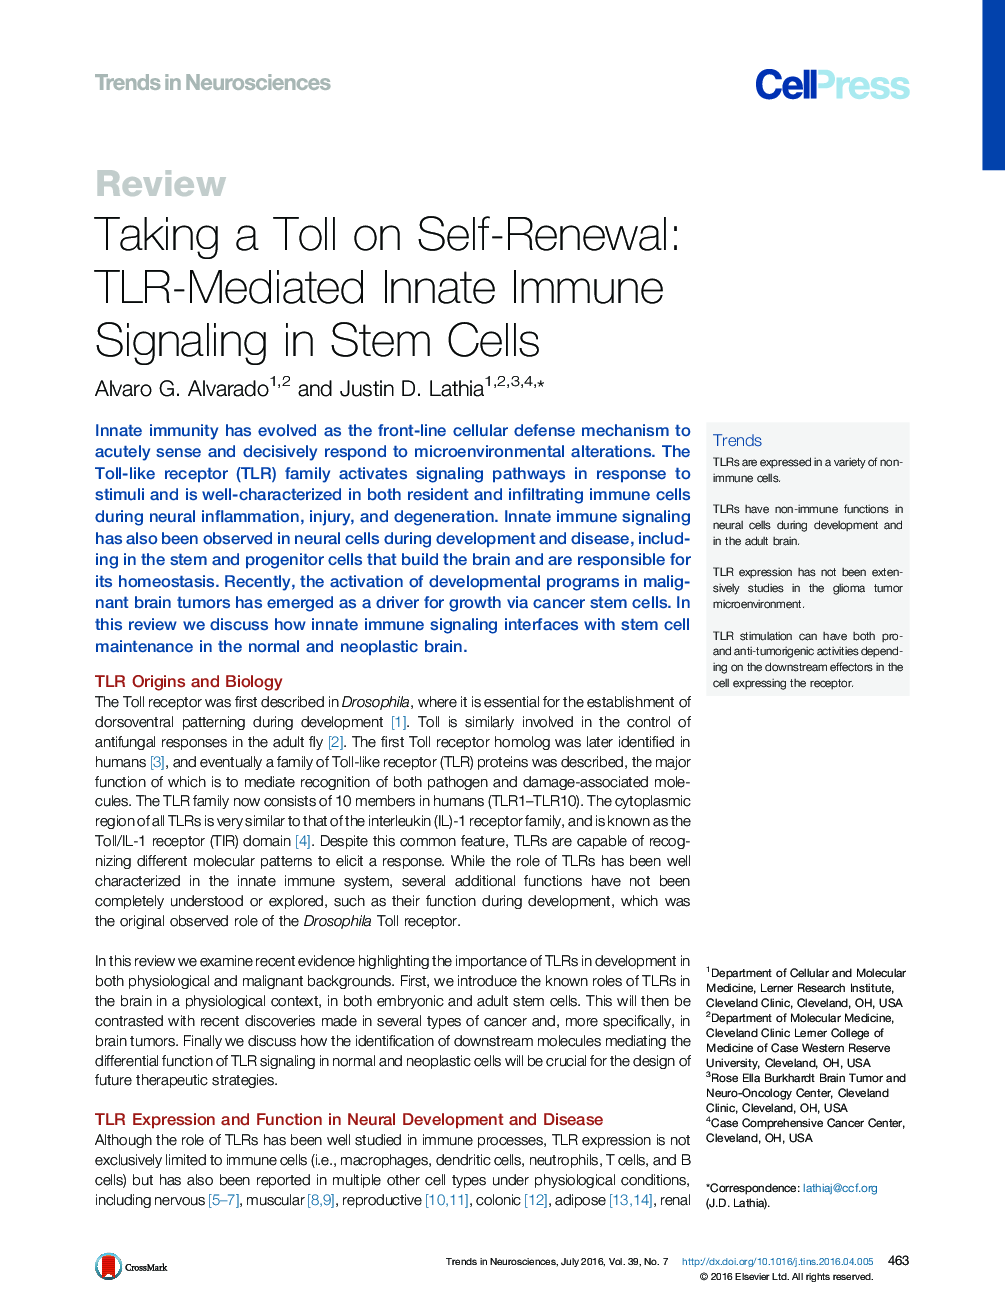 Taking a Toll on Self-Renewal: TLR-Mediated Innate Immune Signaling in Stem Cells